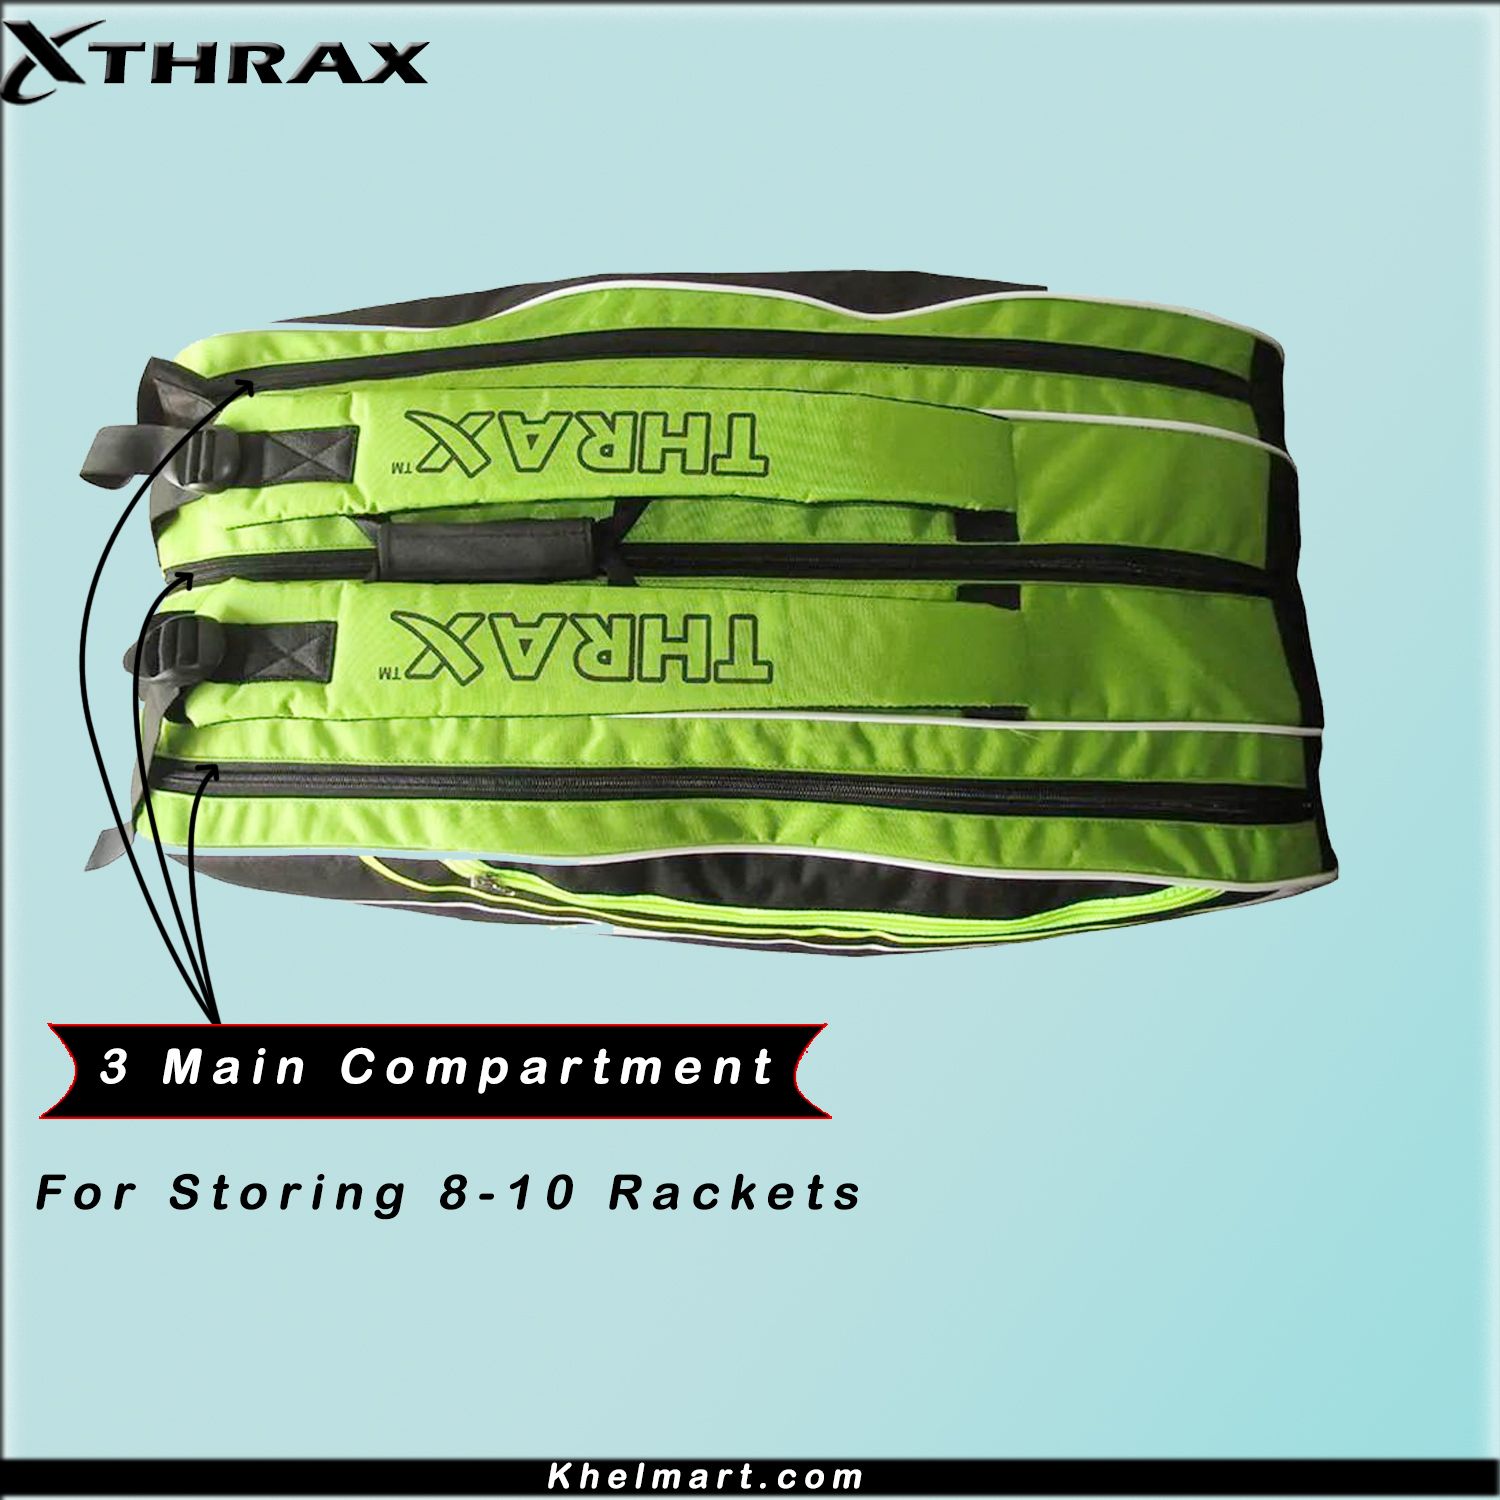 Thrax Aura X10 Badminton Kit Bag Black Lime